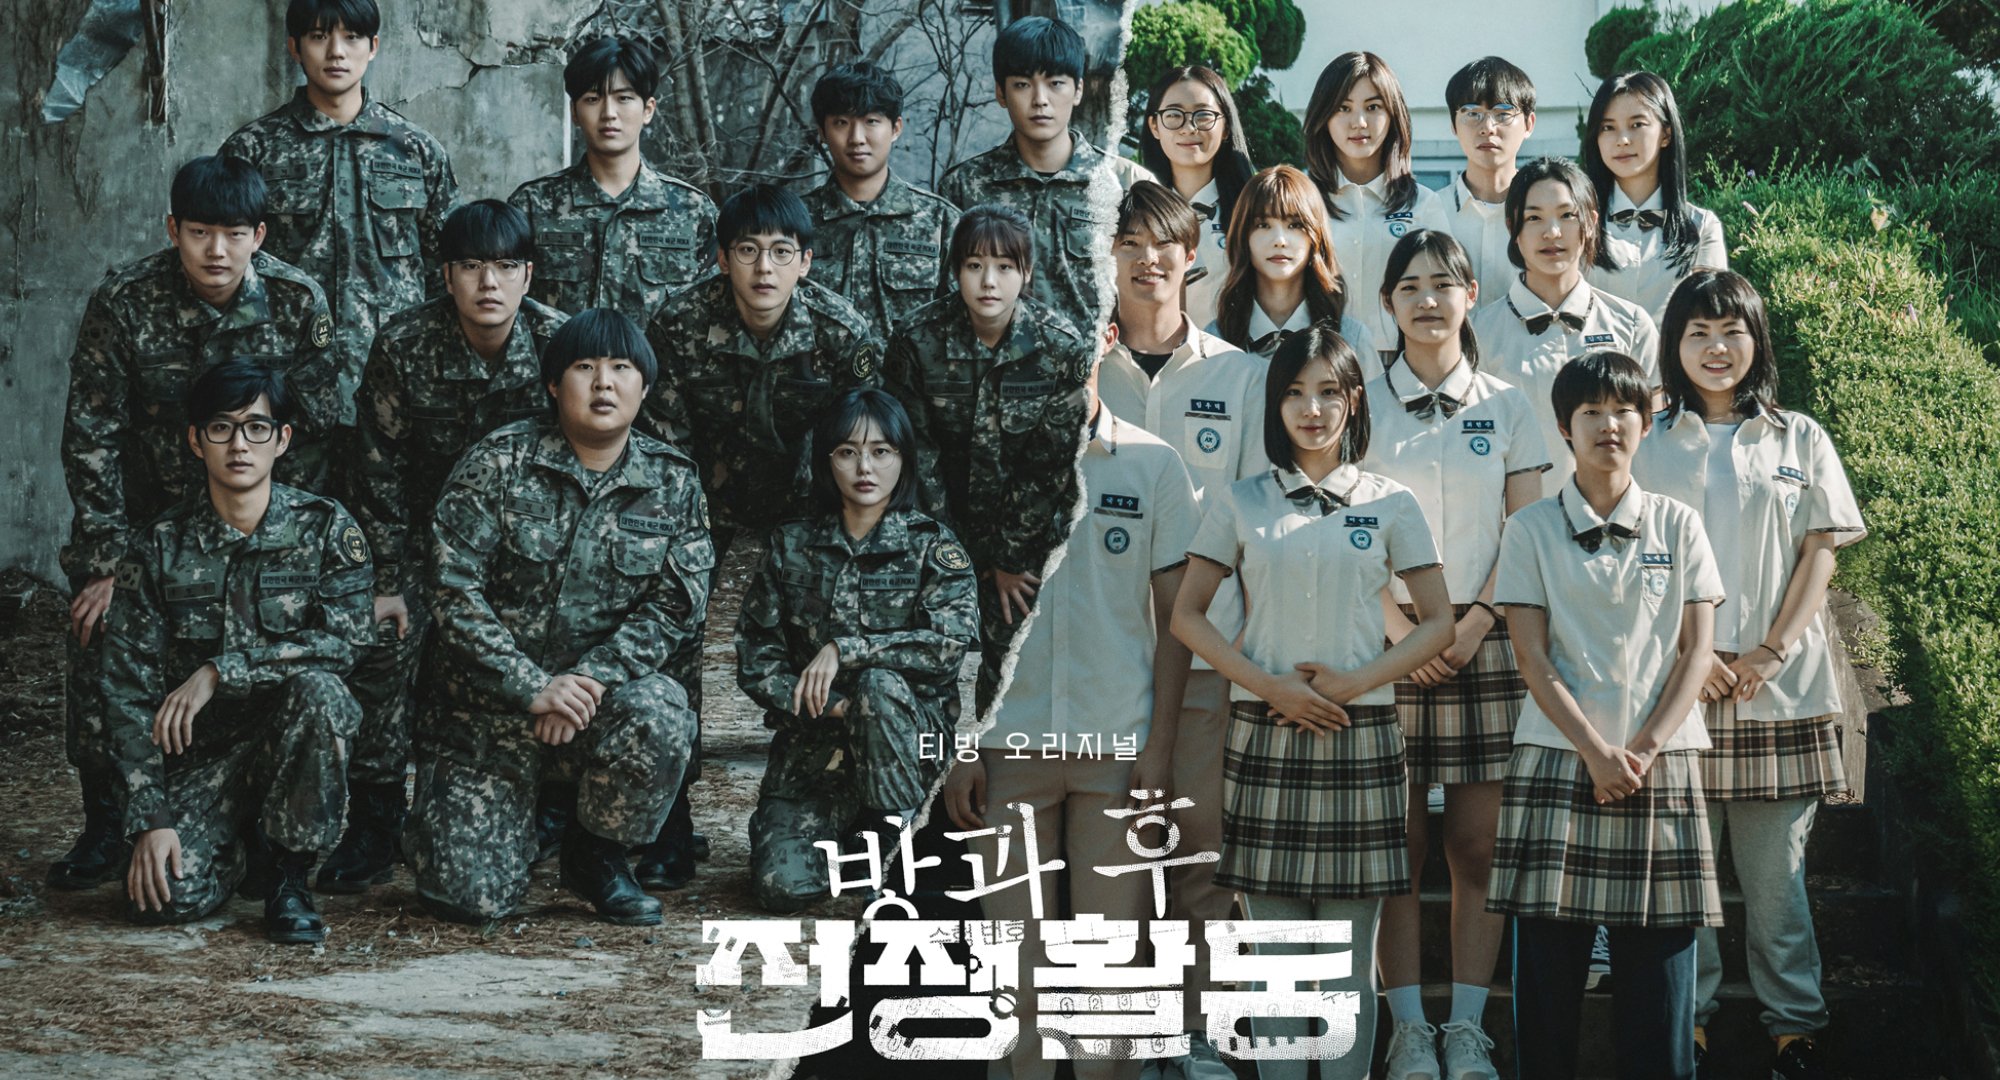 The main cast of the webtoon K-drama 'Duty After School.'